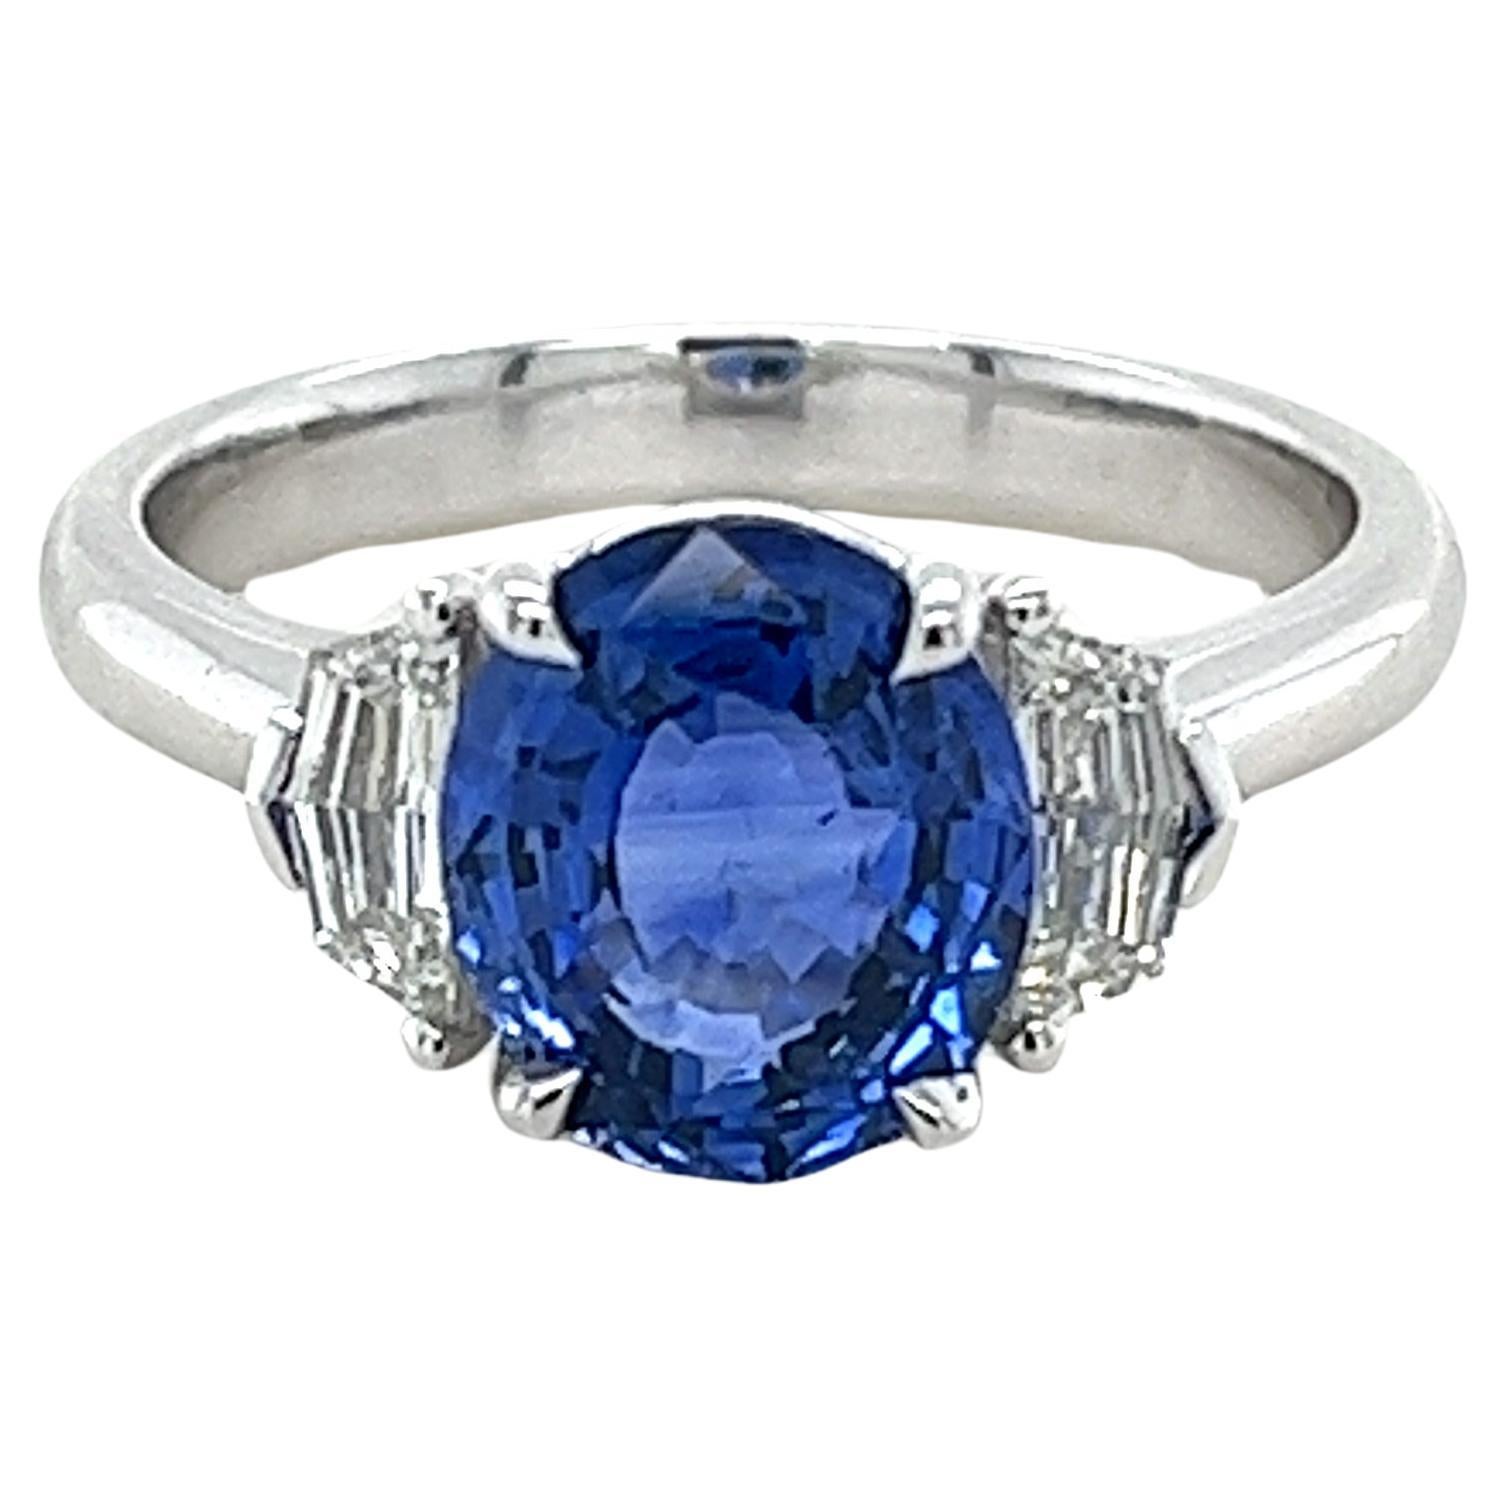 2.75 Carat Ceylon Sapphire & Diamond Ring in Platinum For Sale